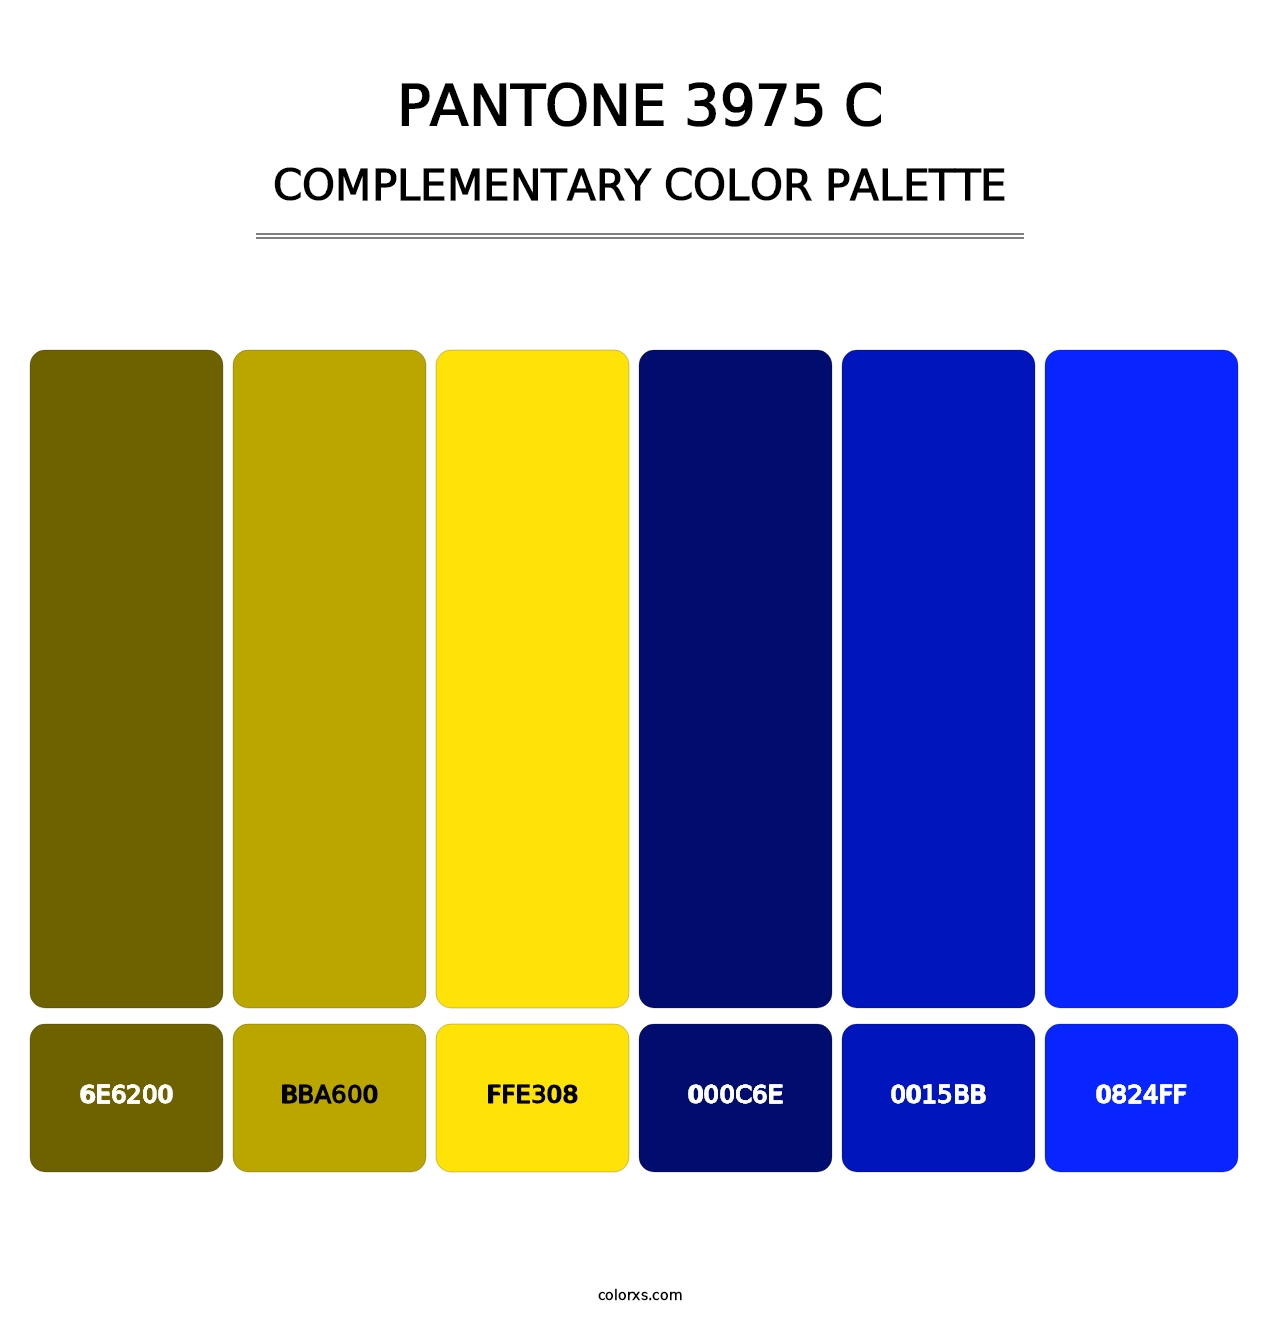 PANTONE 3975 C - Complementary Color Palette